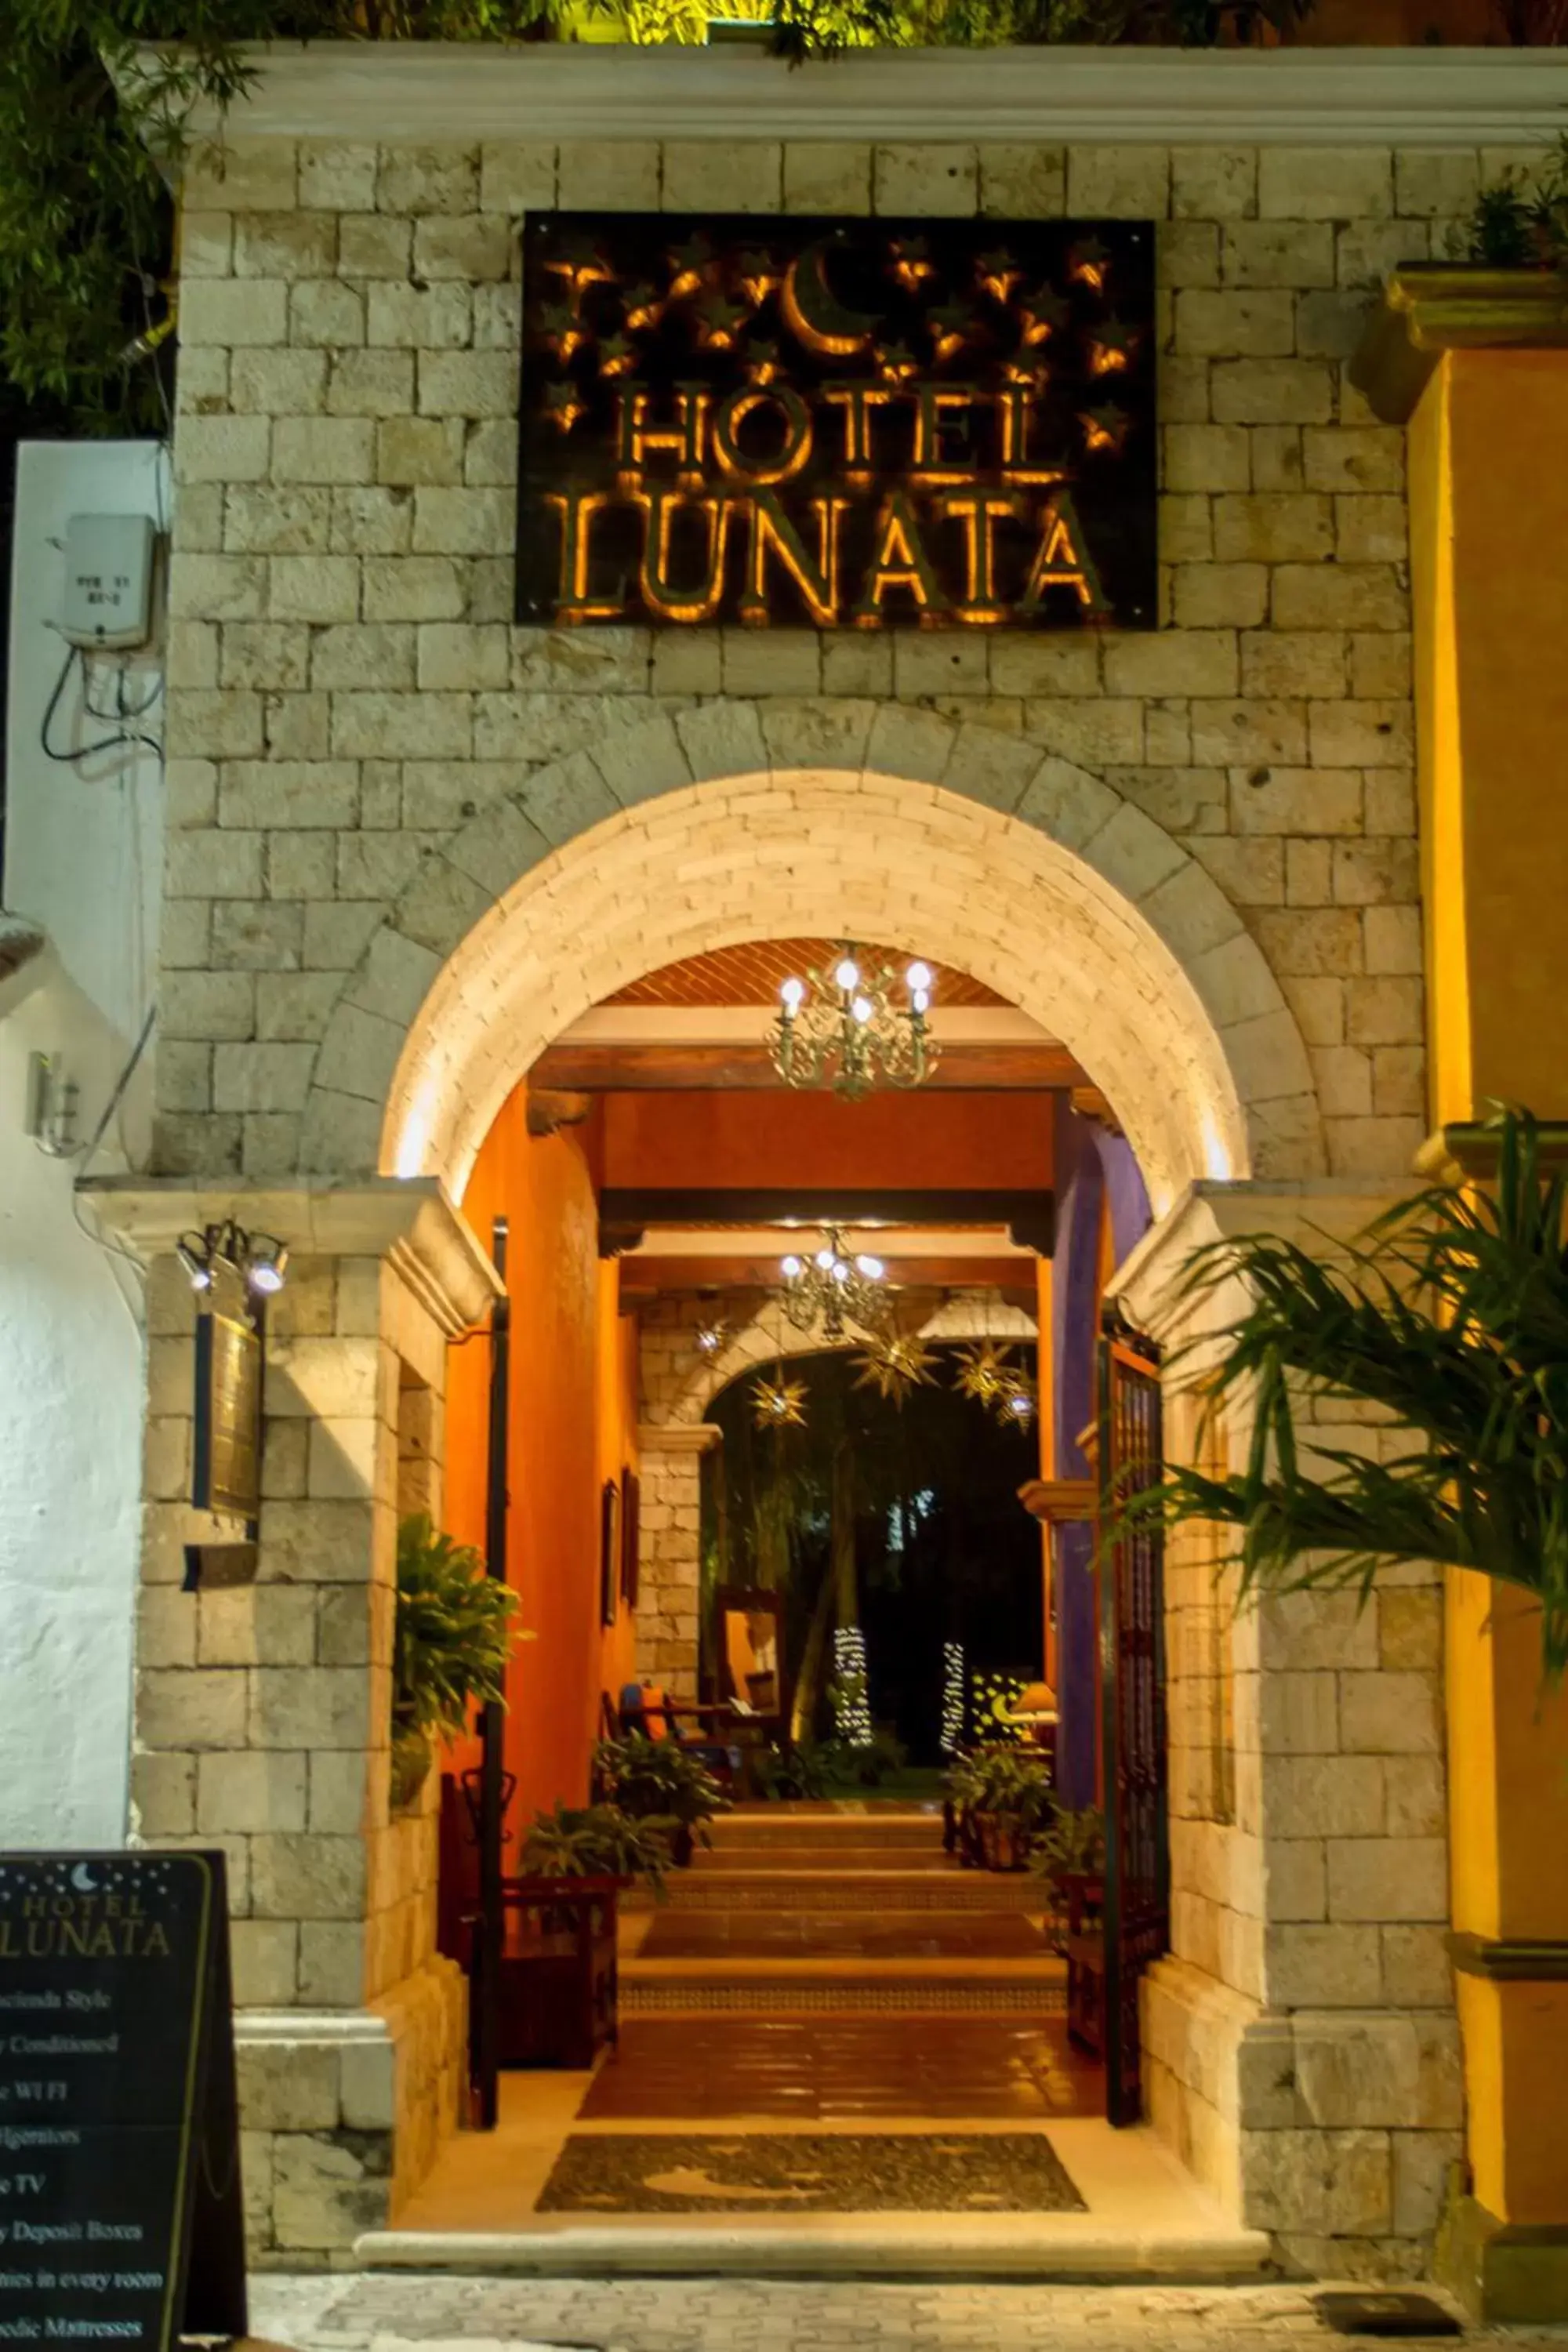 Property logo or sign in Hotel Lunata - 5th Avenue